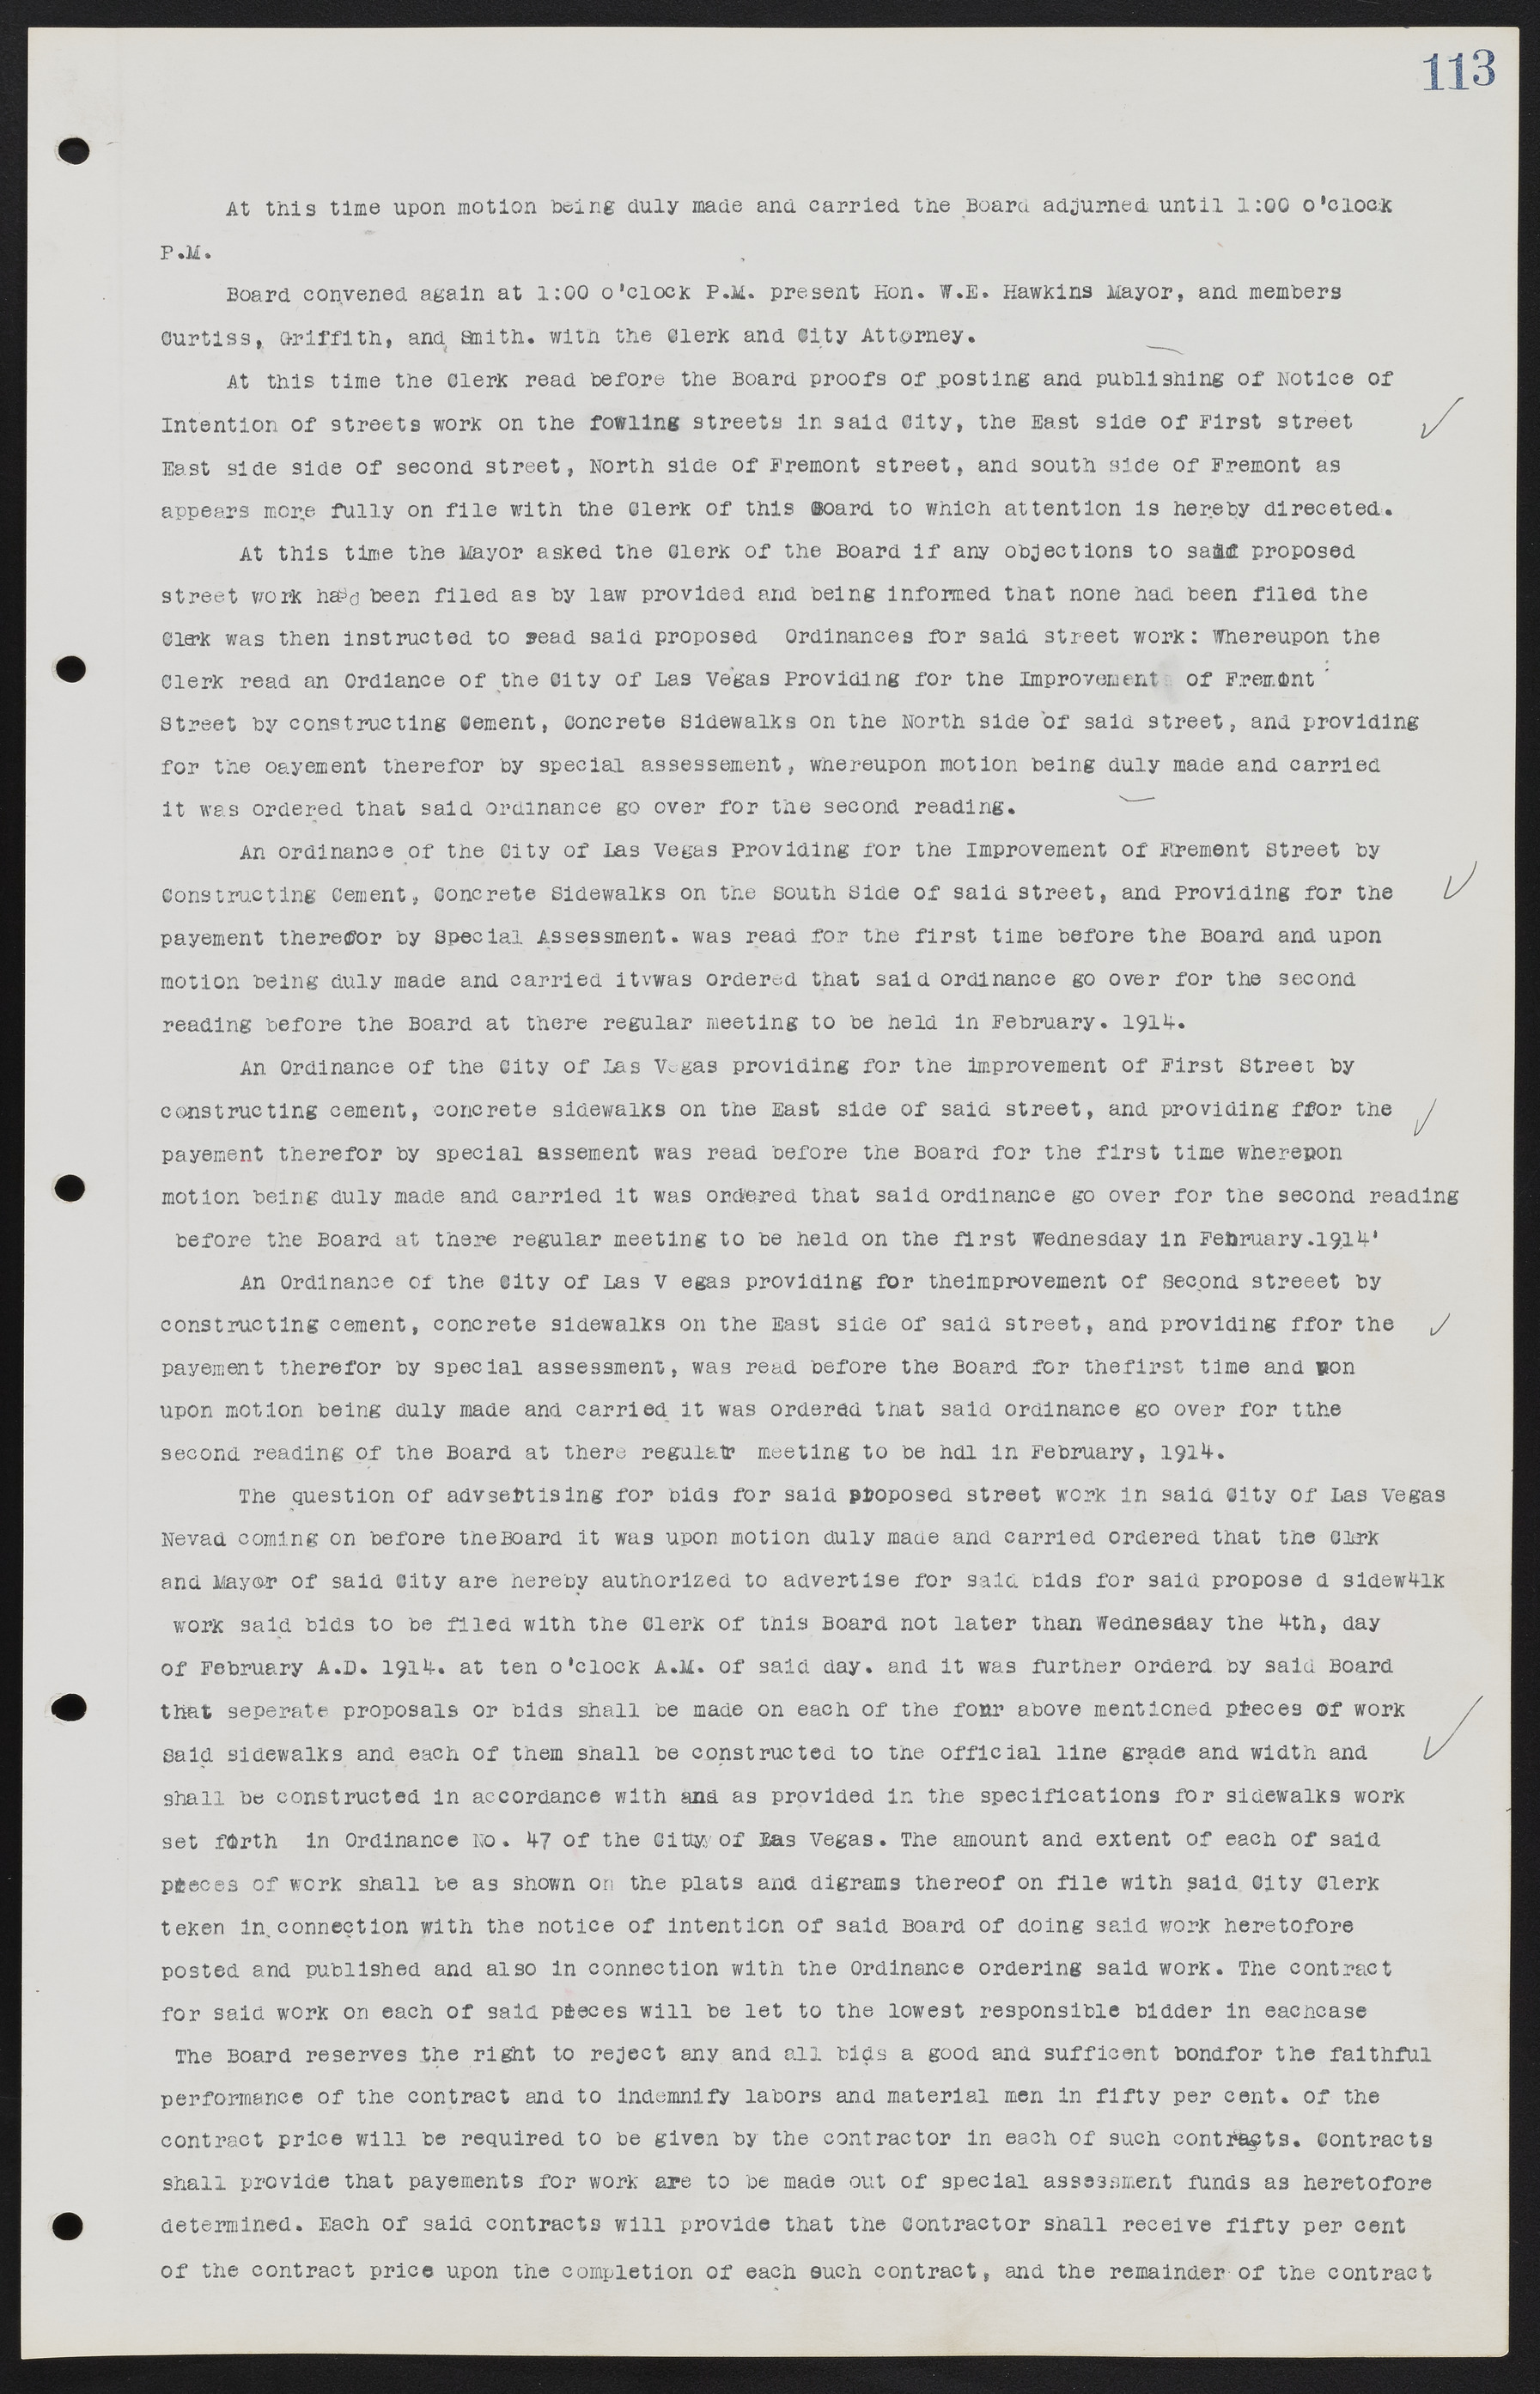 Las Vegas City Commission Minutes, June 22, 1911 to February 7, 1922, lvc000001-127